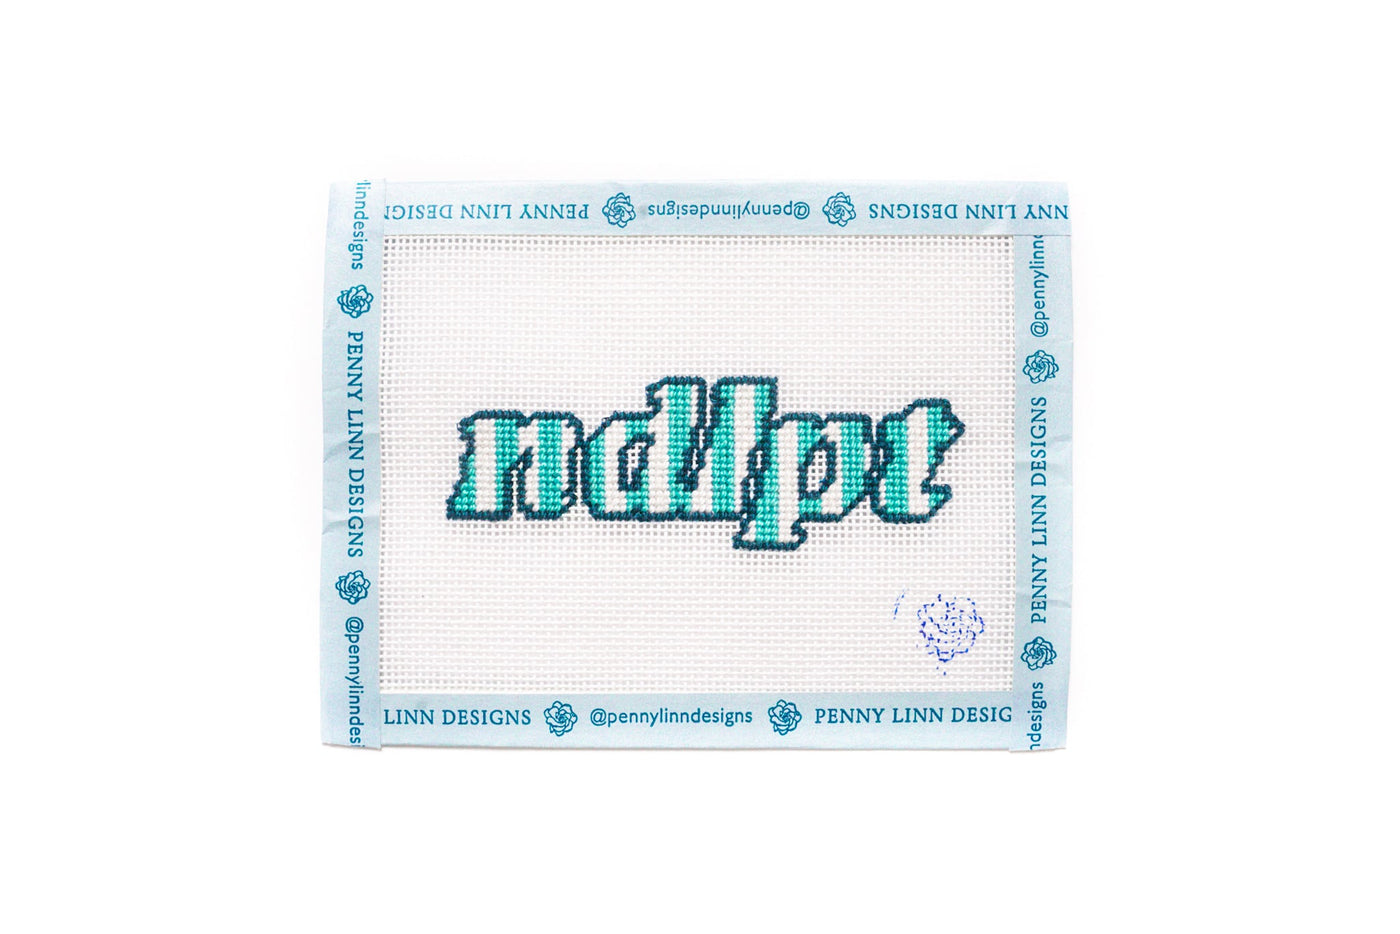 Stitched AF x Penny Linn Designs NDLPT Patch Kit - Penny Linn Designs - Penny Linn Designs